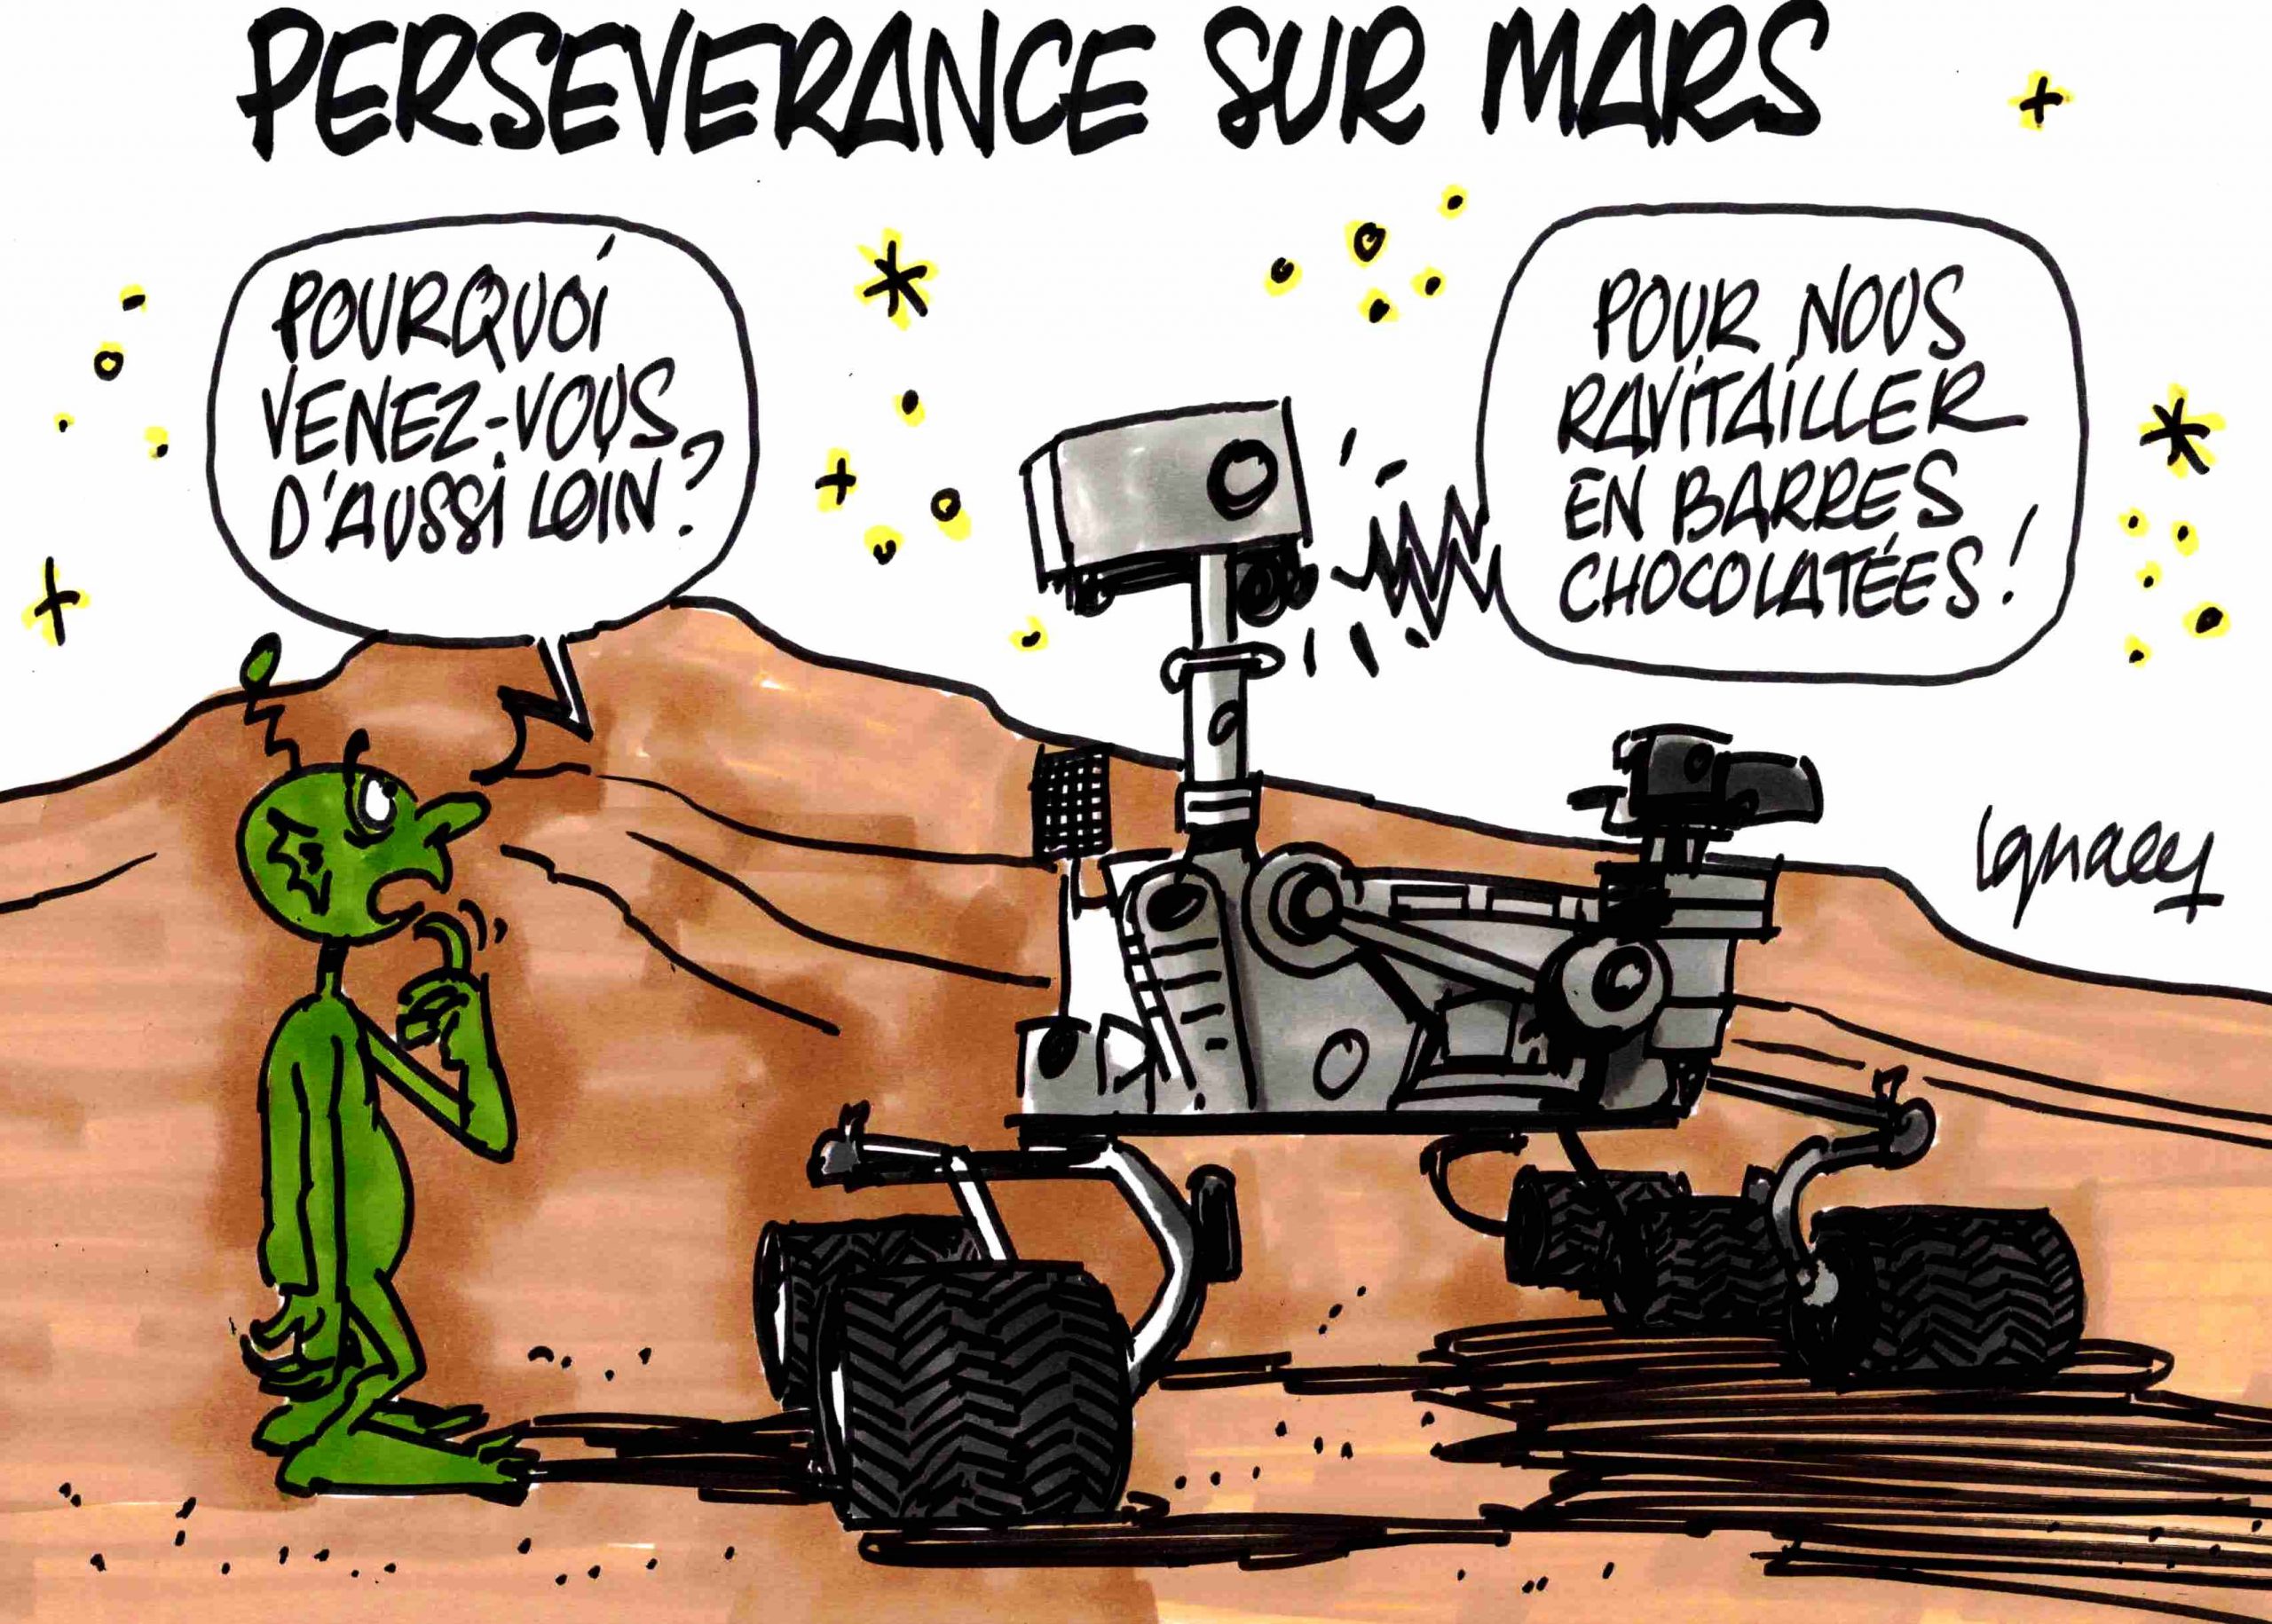 Ignace - Perseverance sur Mars